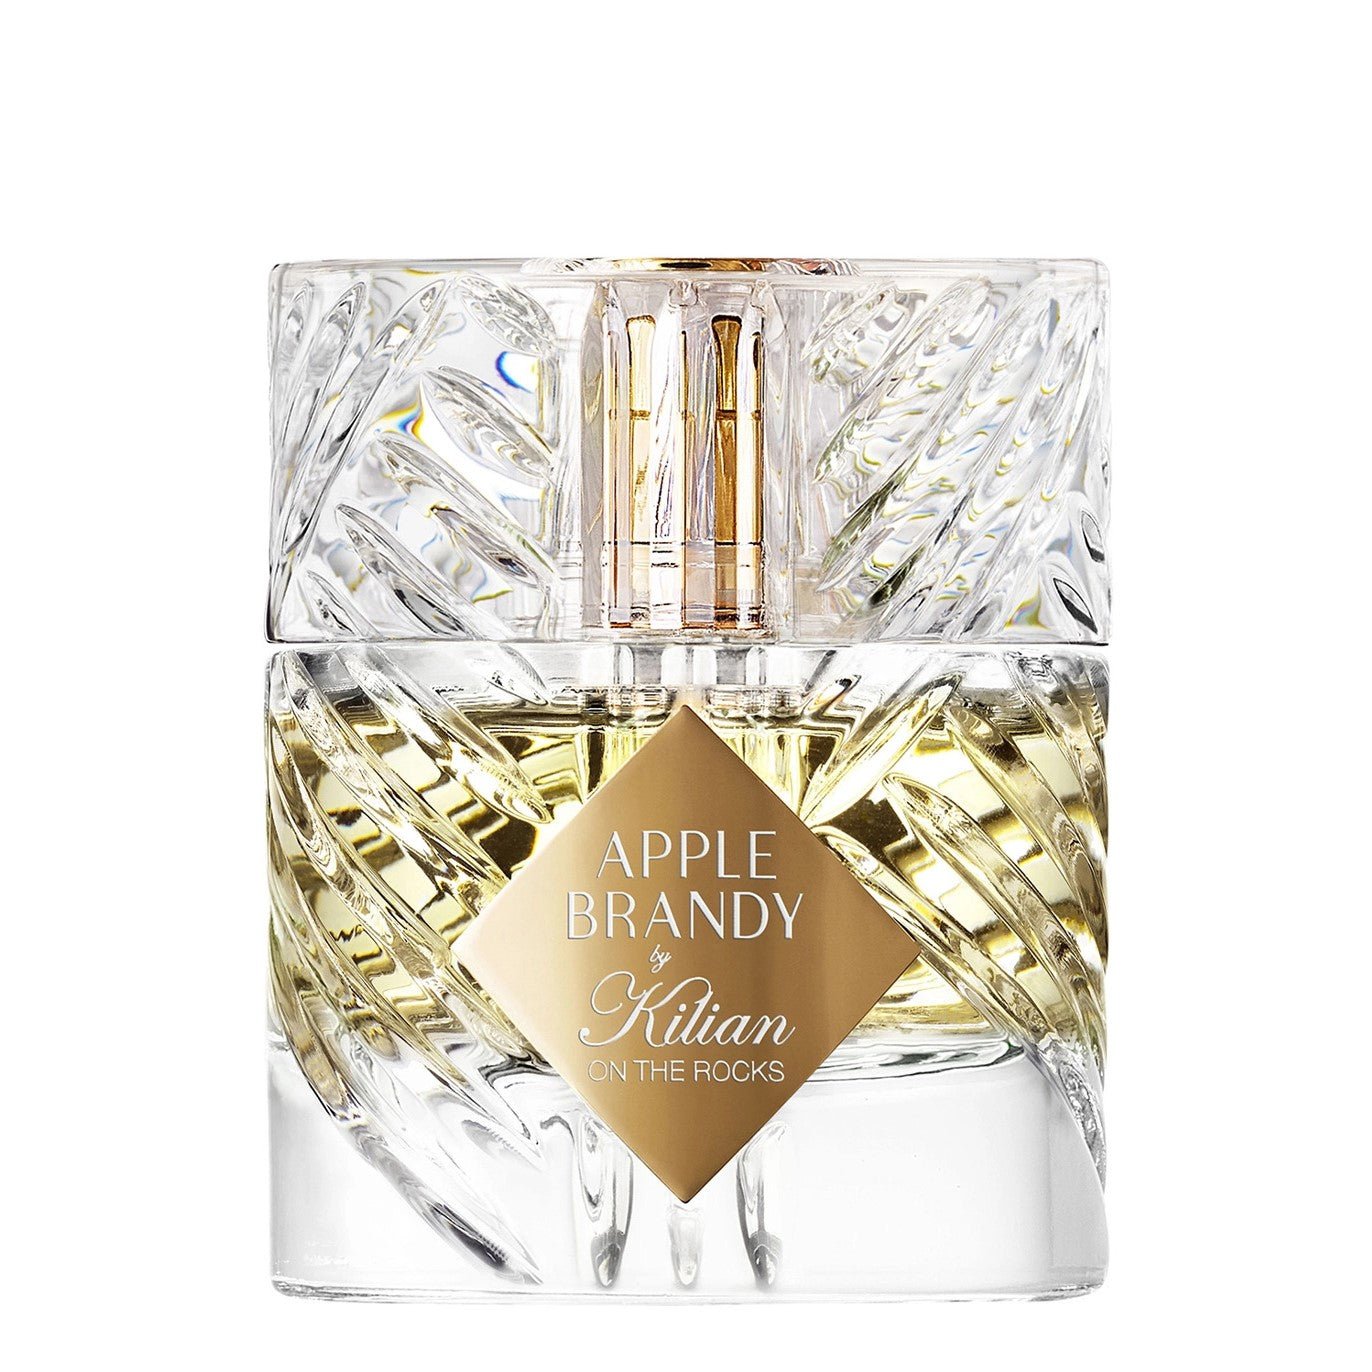 Kilian - The Liquors - Apple Brandy on the Rocks.